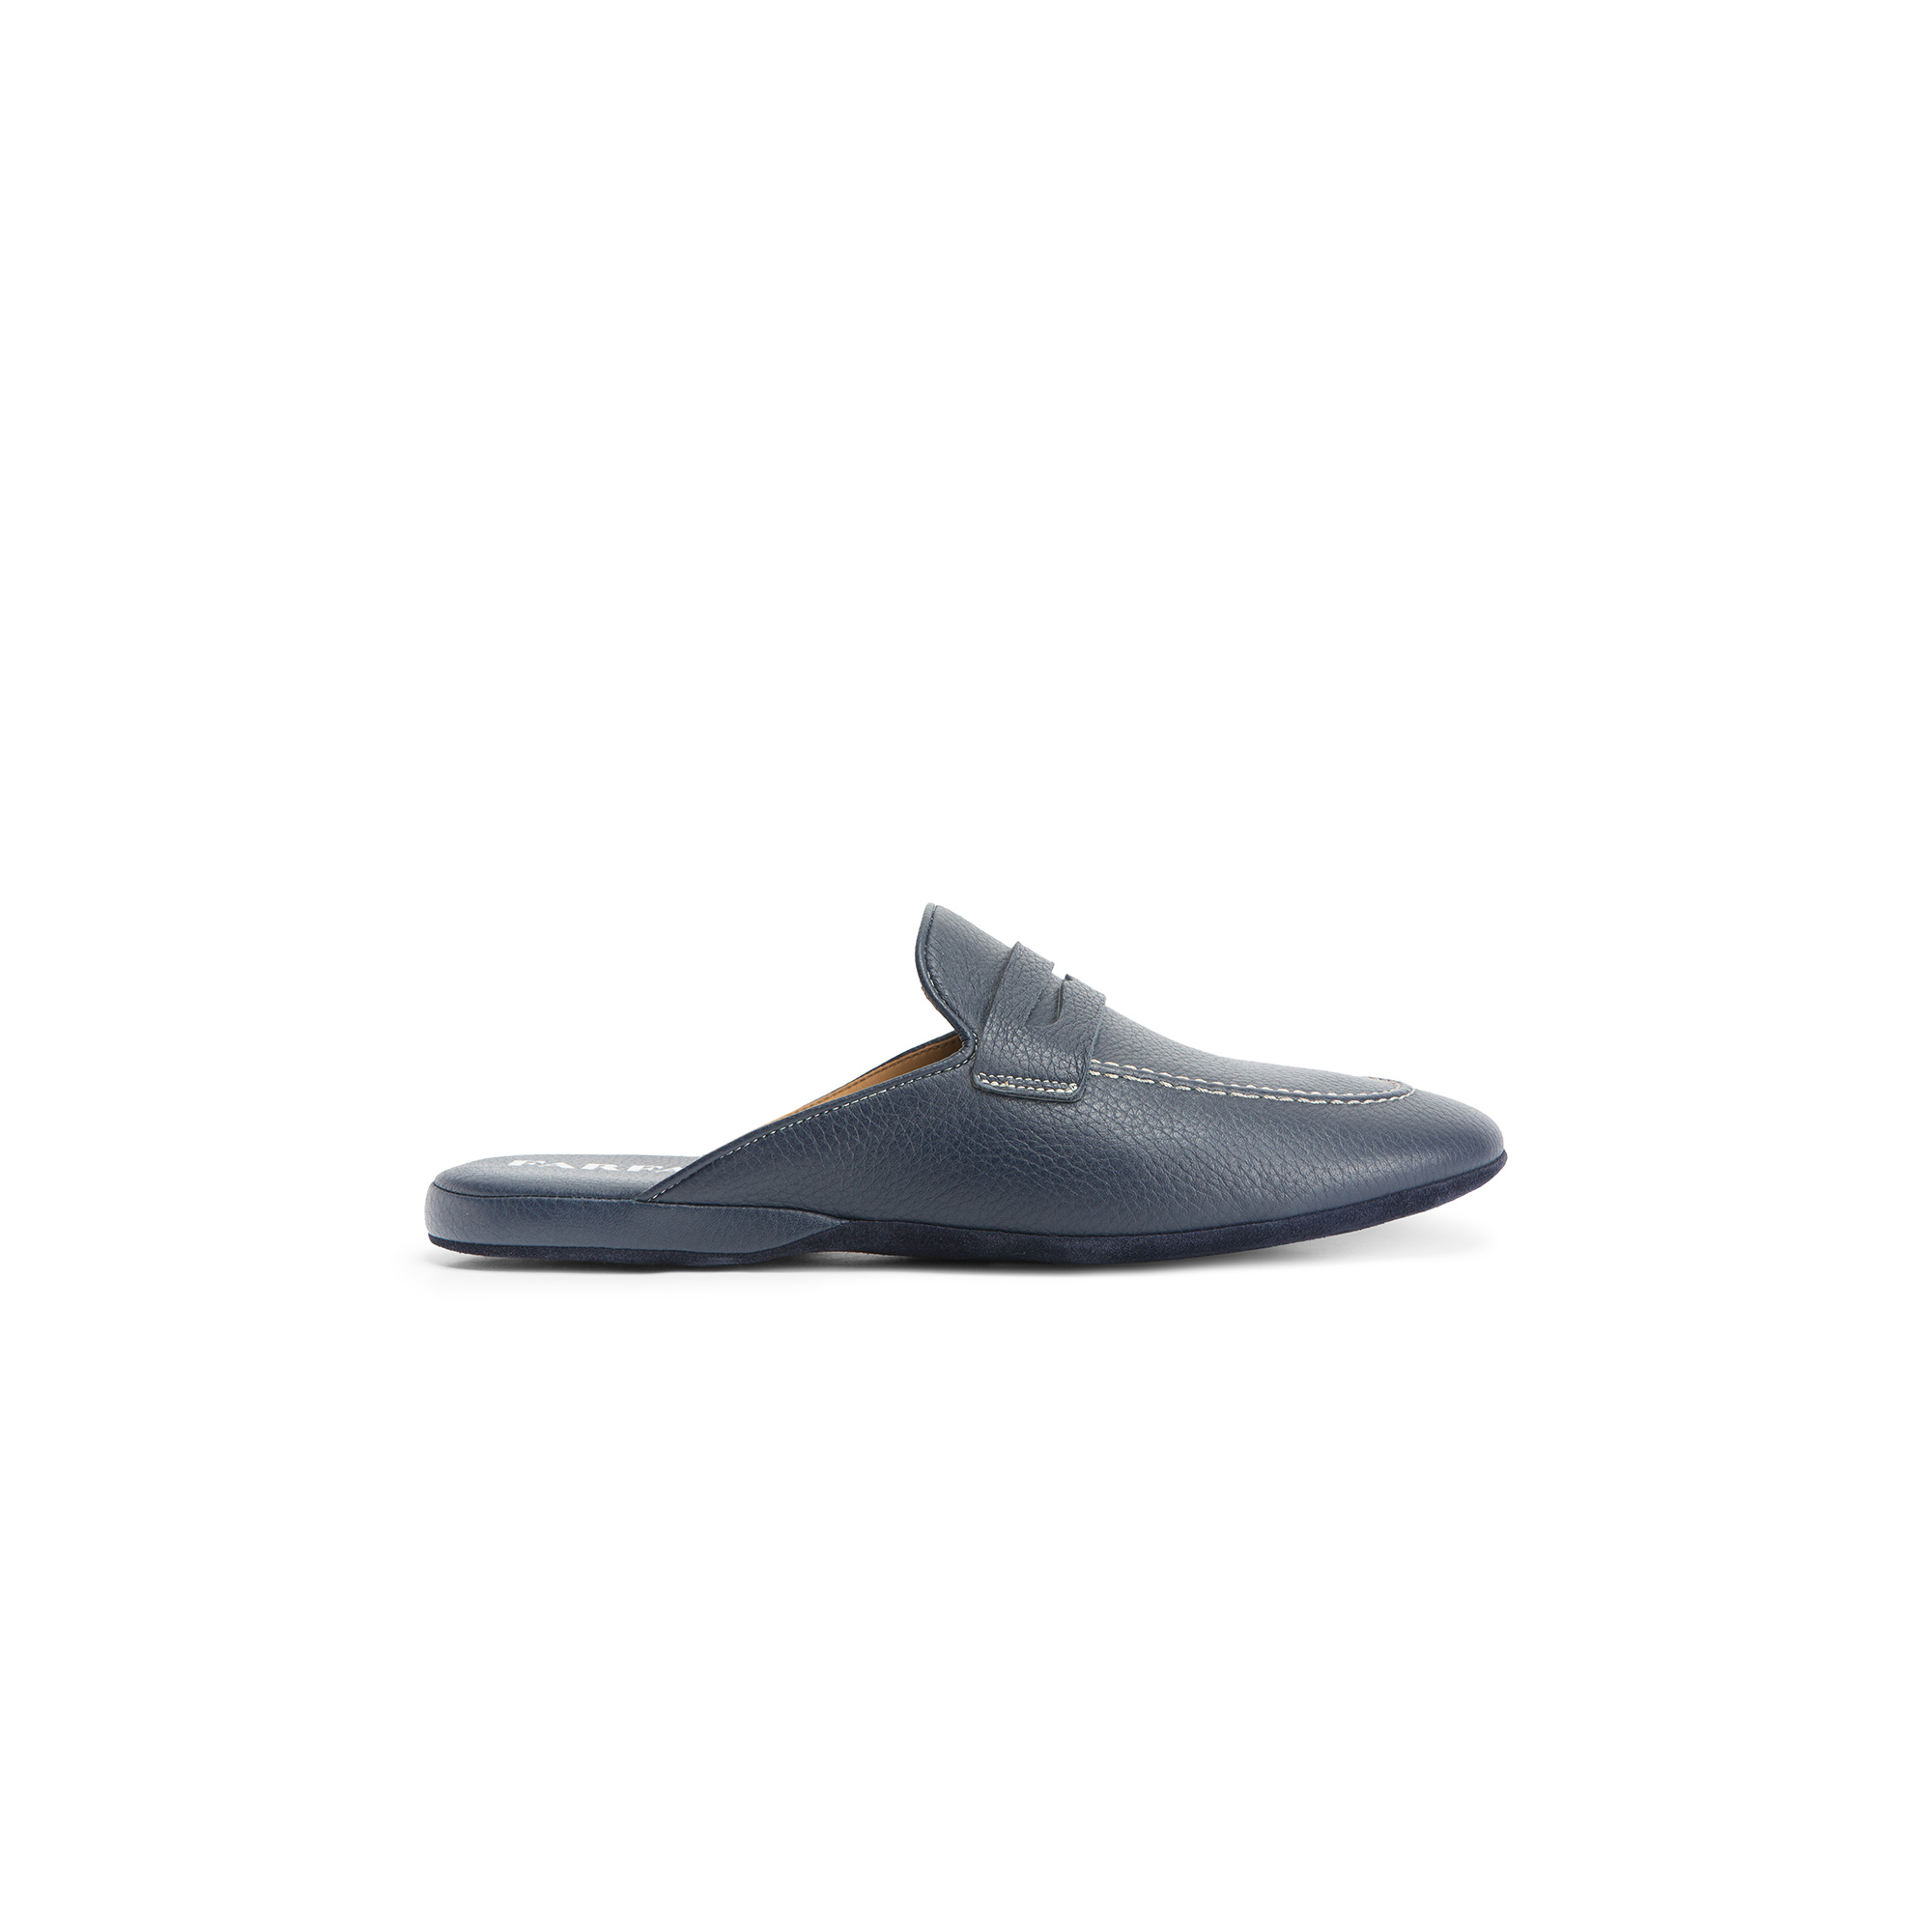 Pantofola aperta interno cervo blu night - Farfalla italian slippers